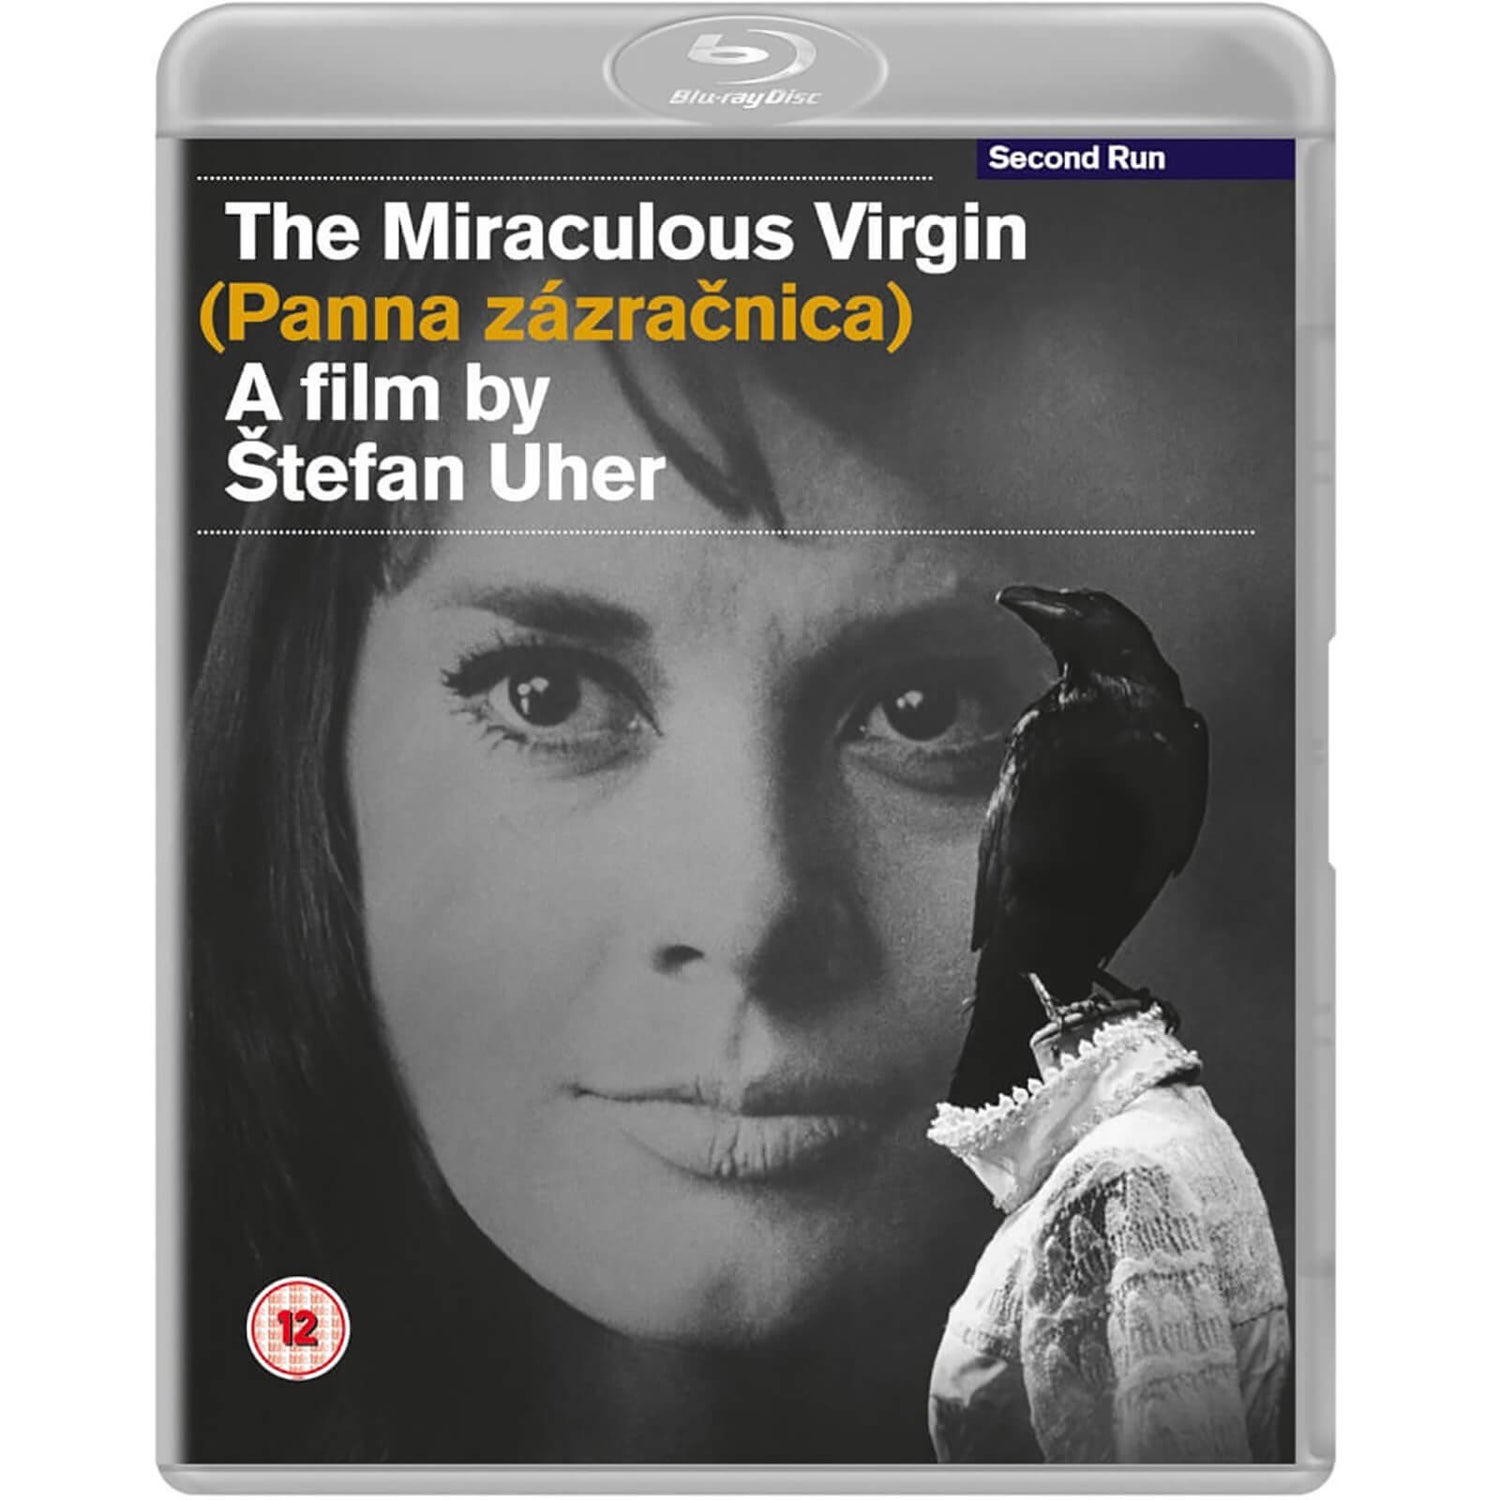 The Miraculous Virgin Blu-ray